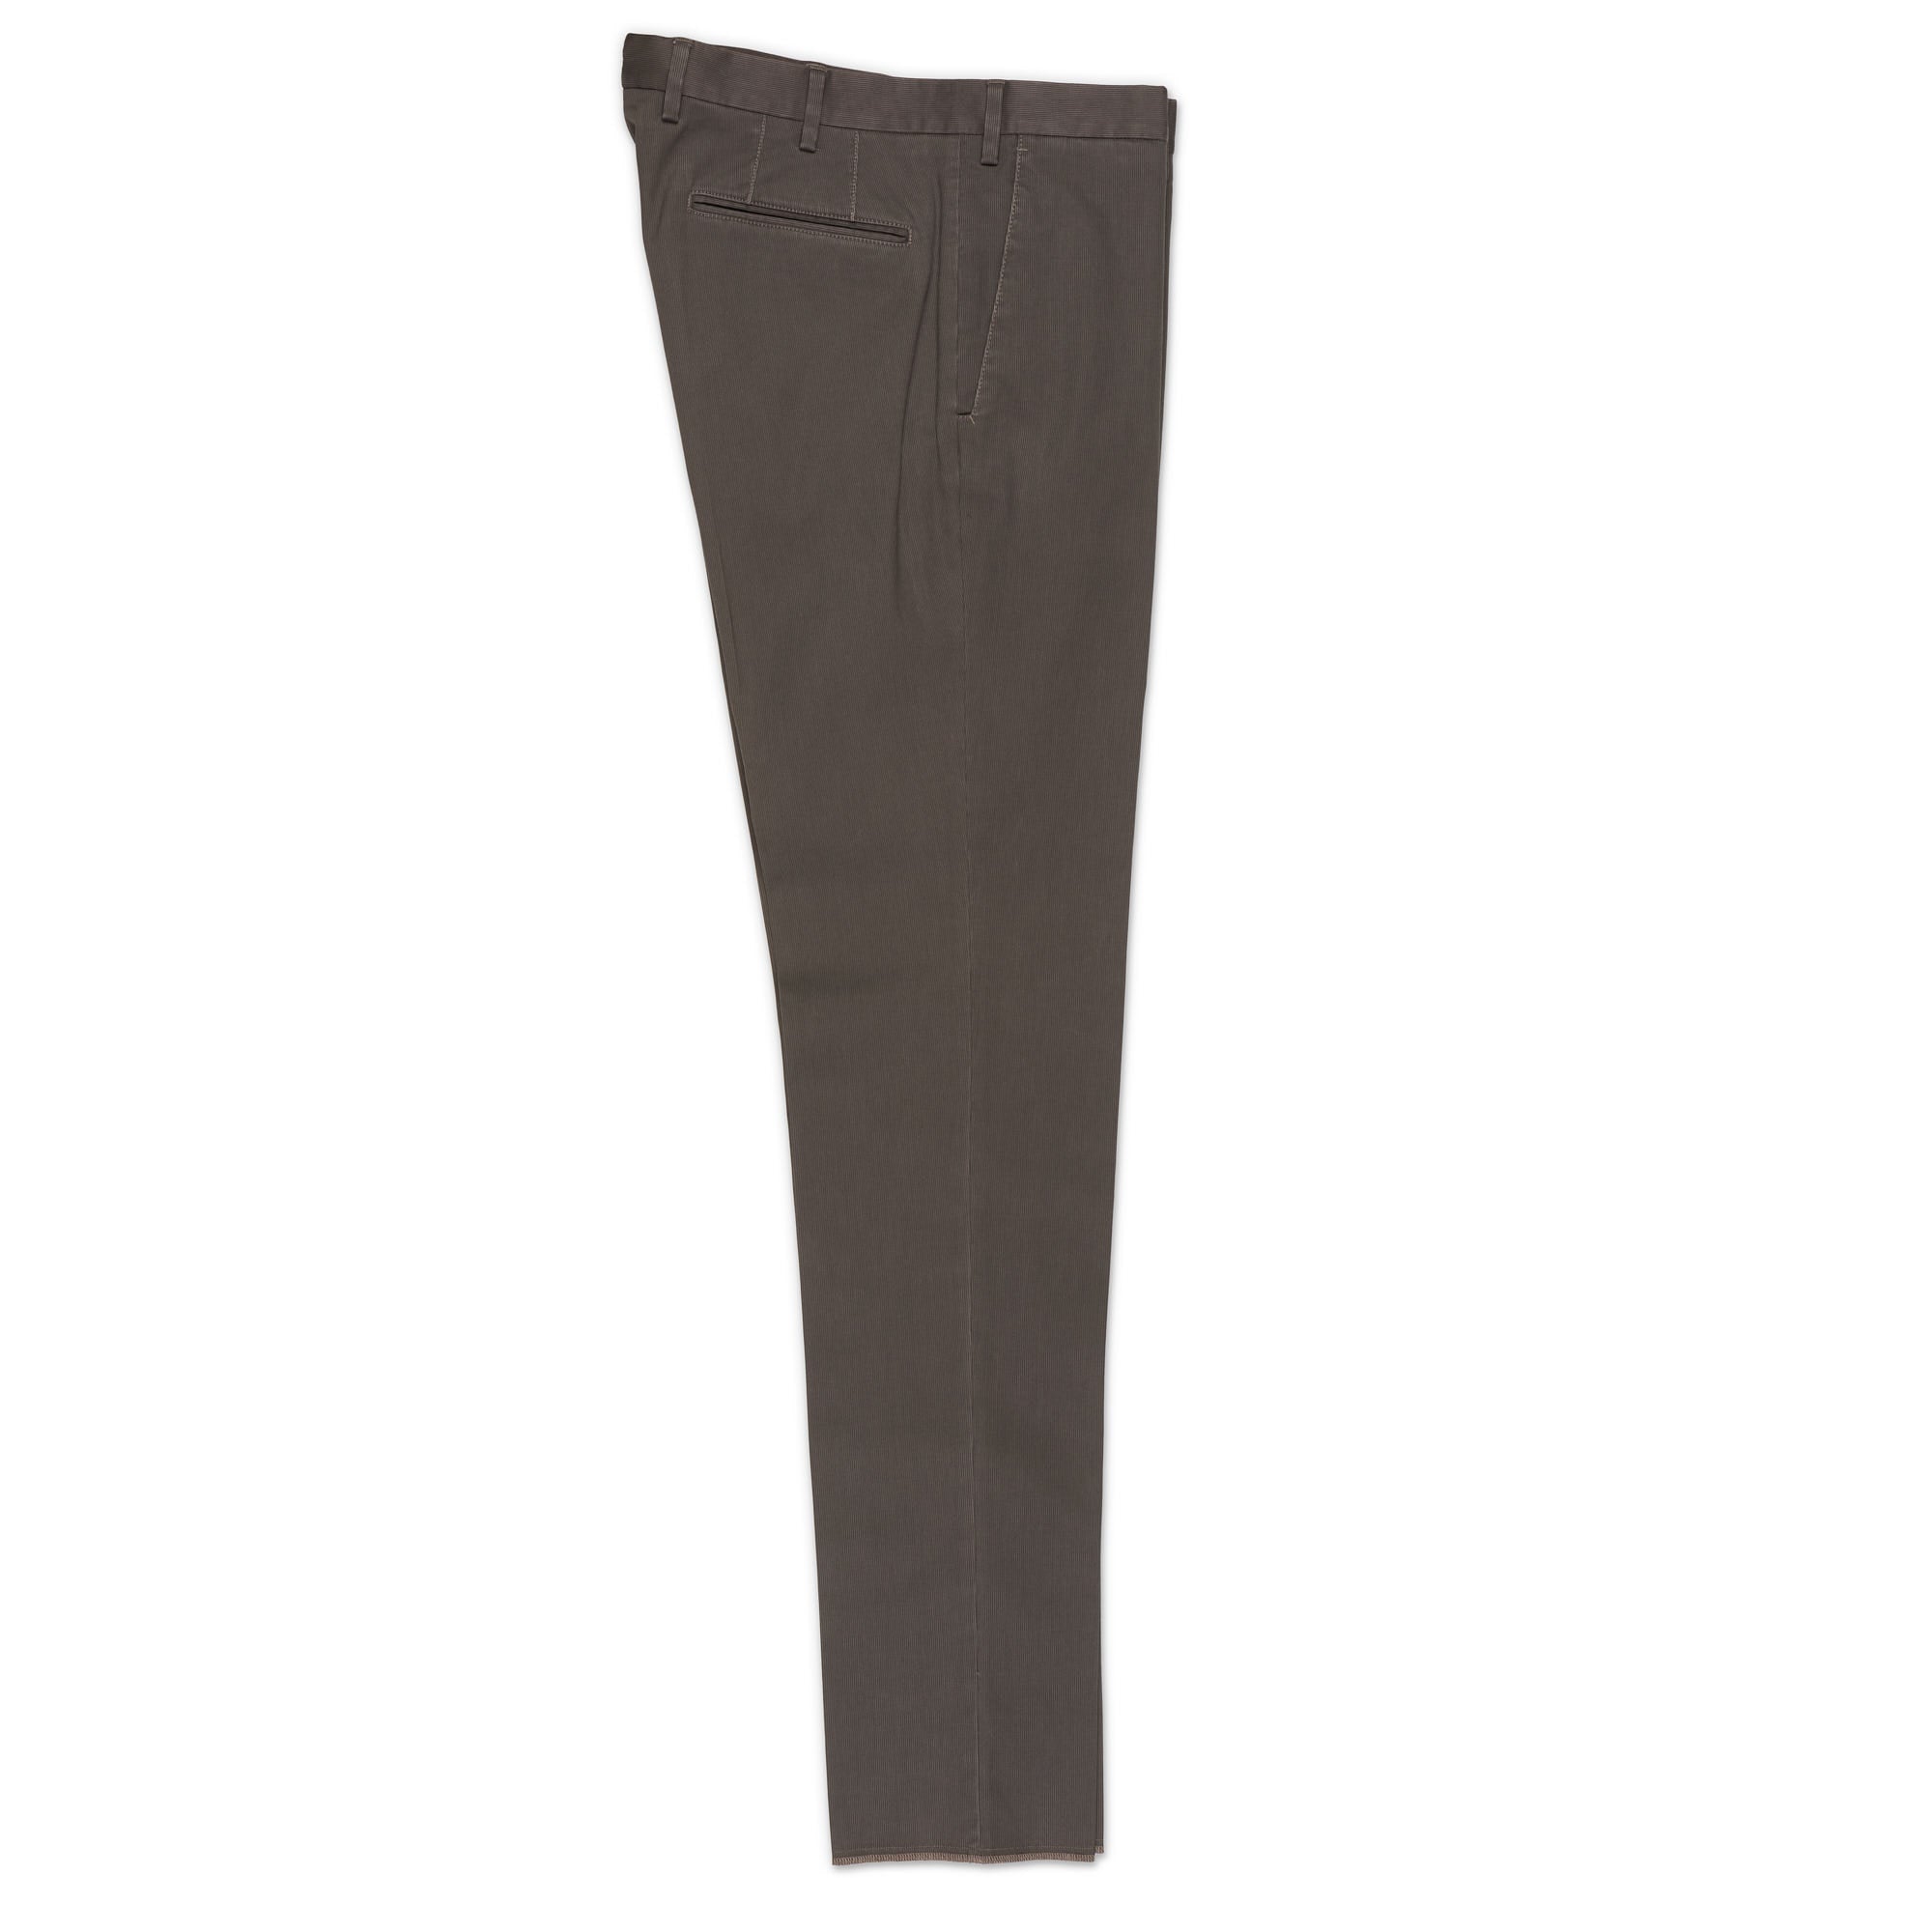 INCOTEX (Slowear) Gray Cotton Stretch Pants NEW Slim Fit INCOTEX